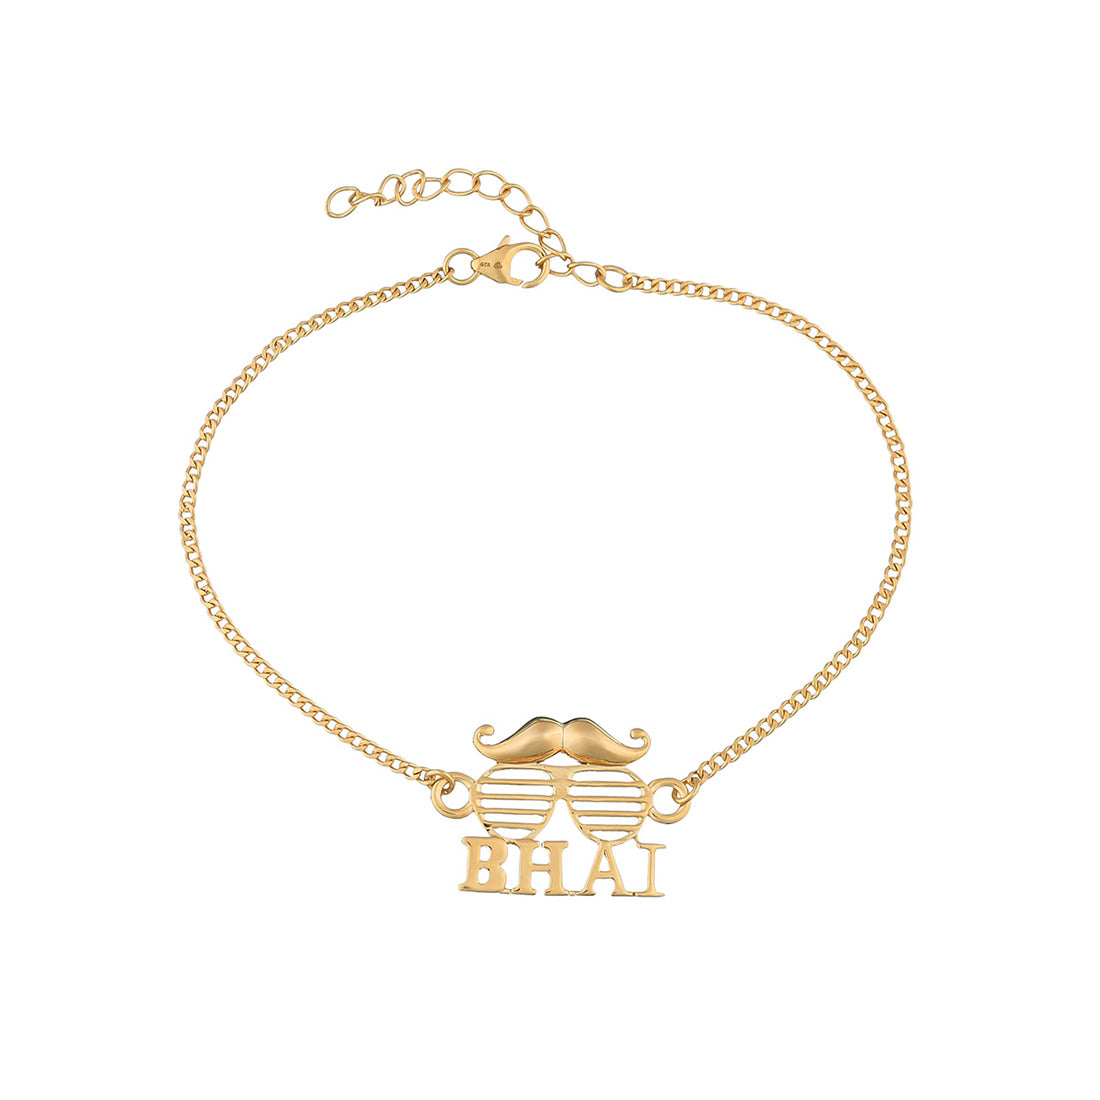 Macys Dragon Charm Leather Bracelet in 22k Gold  Macys